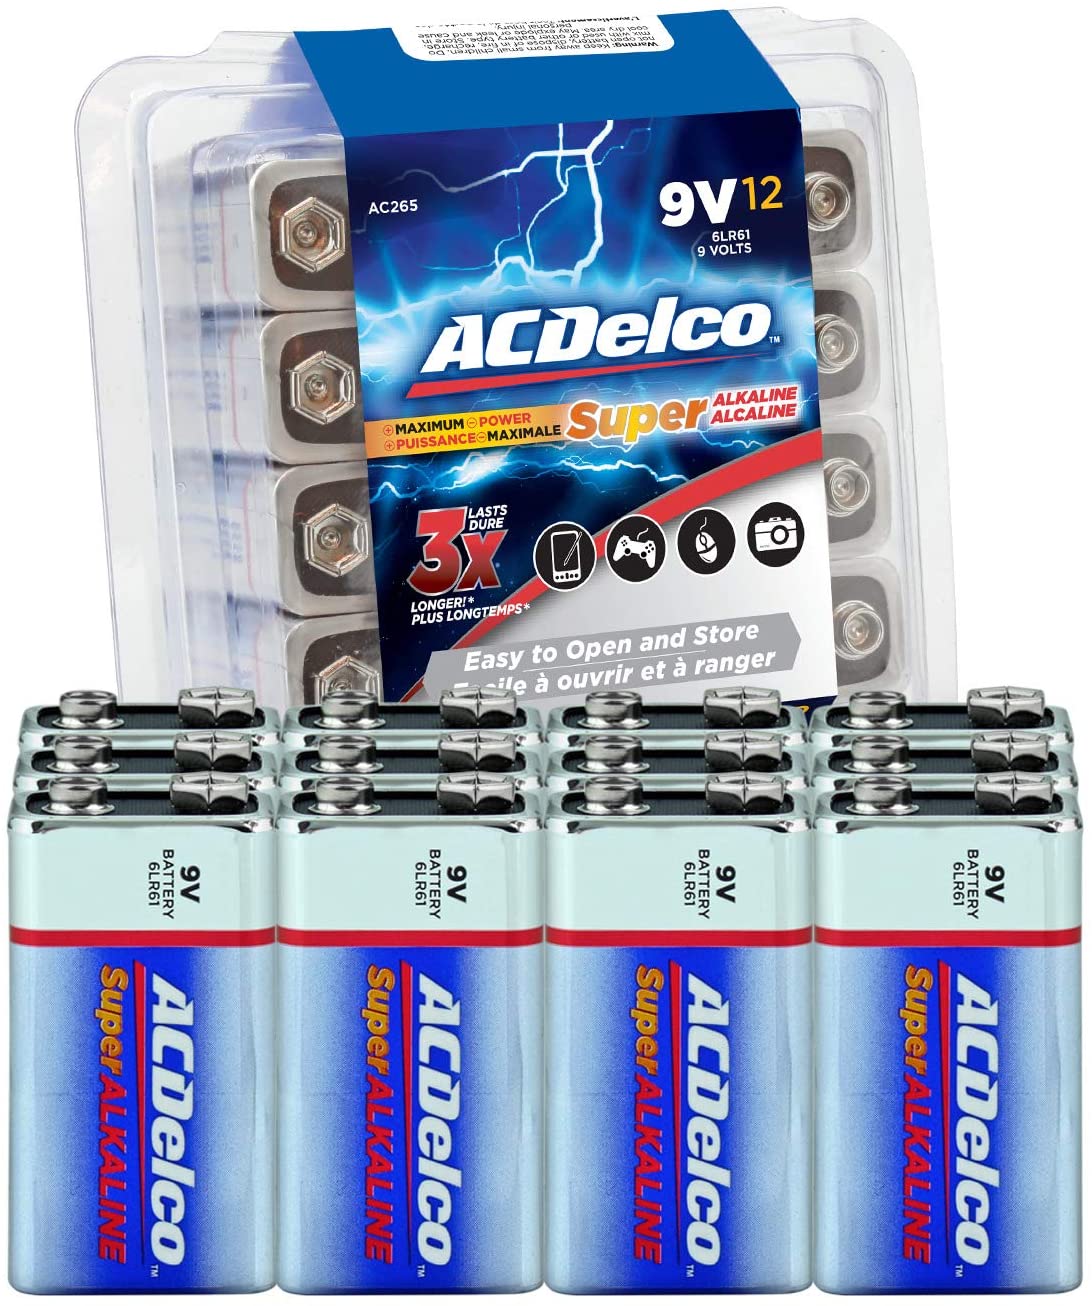 ACDelco Alkaline AAA Batteries (100-Pack) in the AAA Batteries